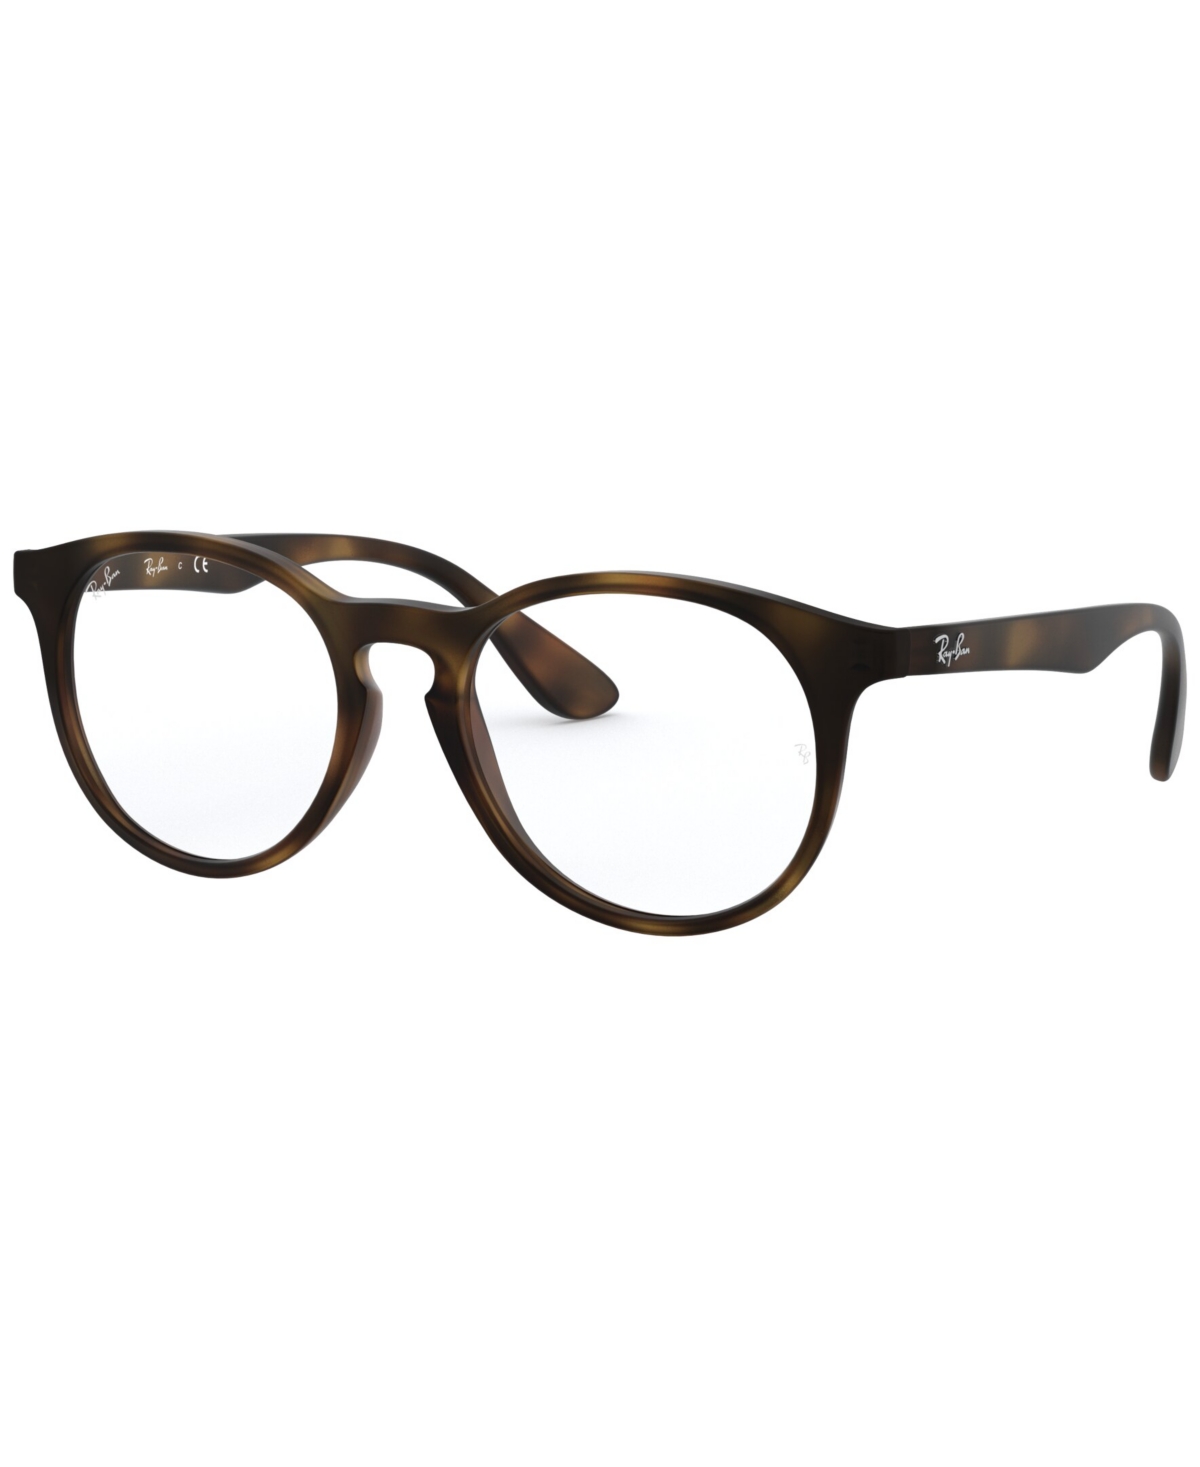 RY1554 Phantos Eyeglasses - Tortoise